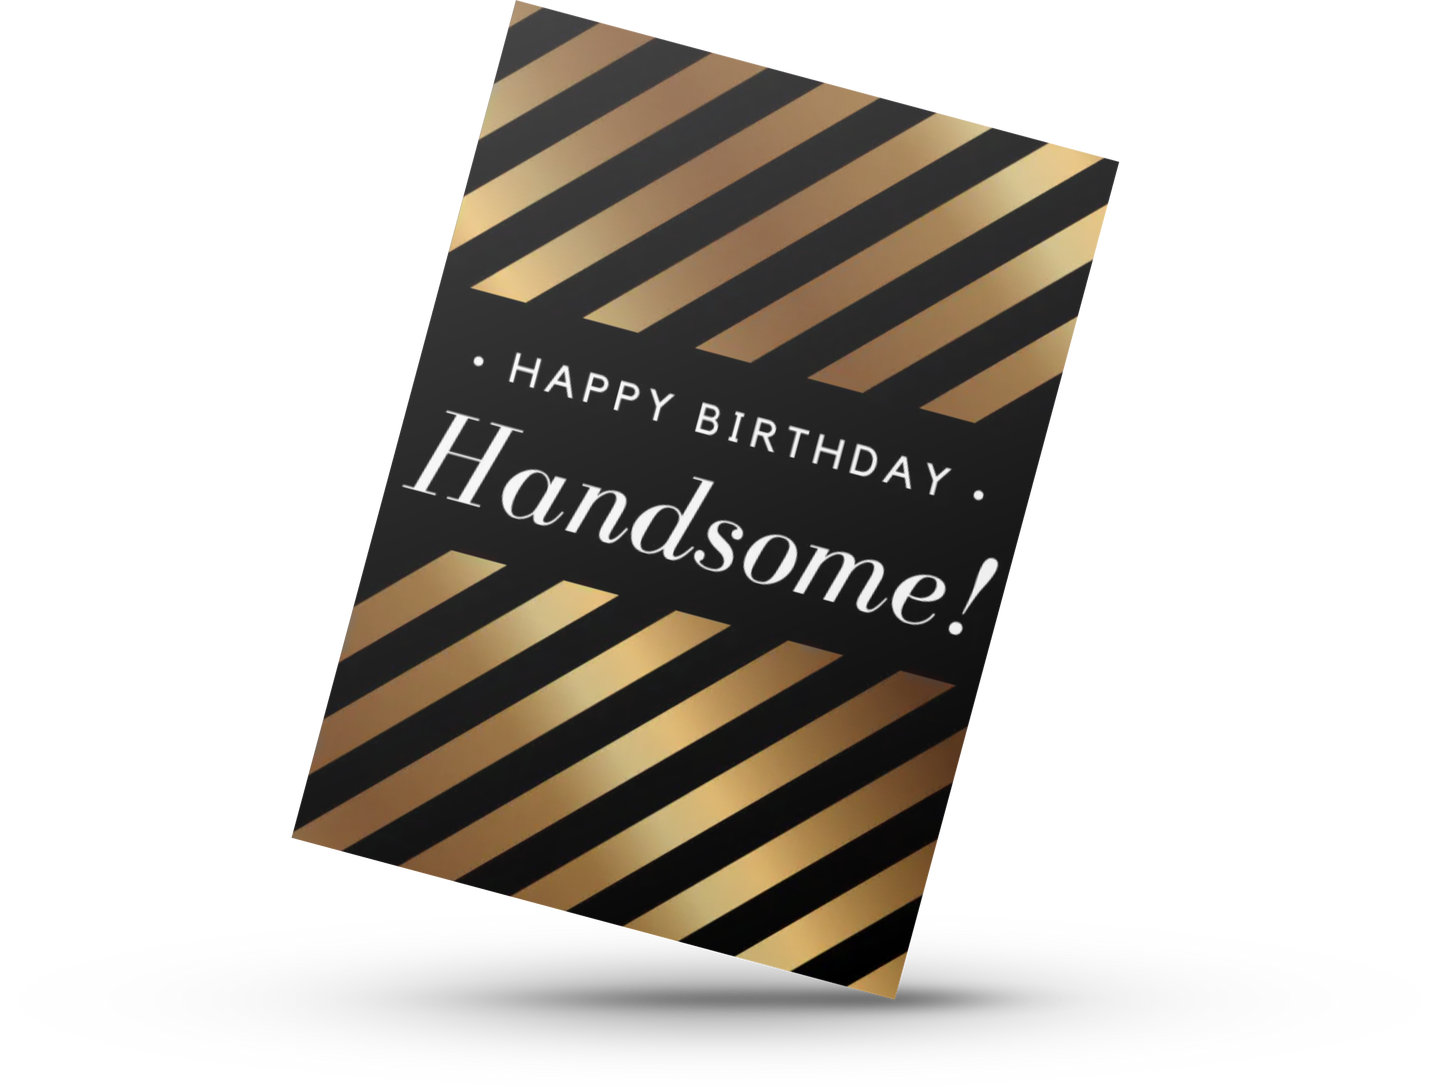 Happy Birthday Handsome - Lyfe Every Day Greeting Card